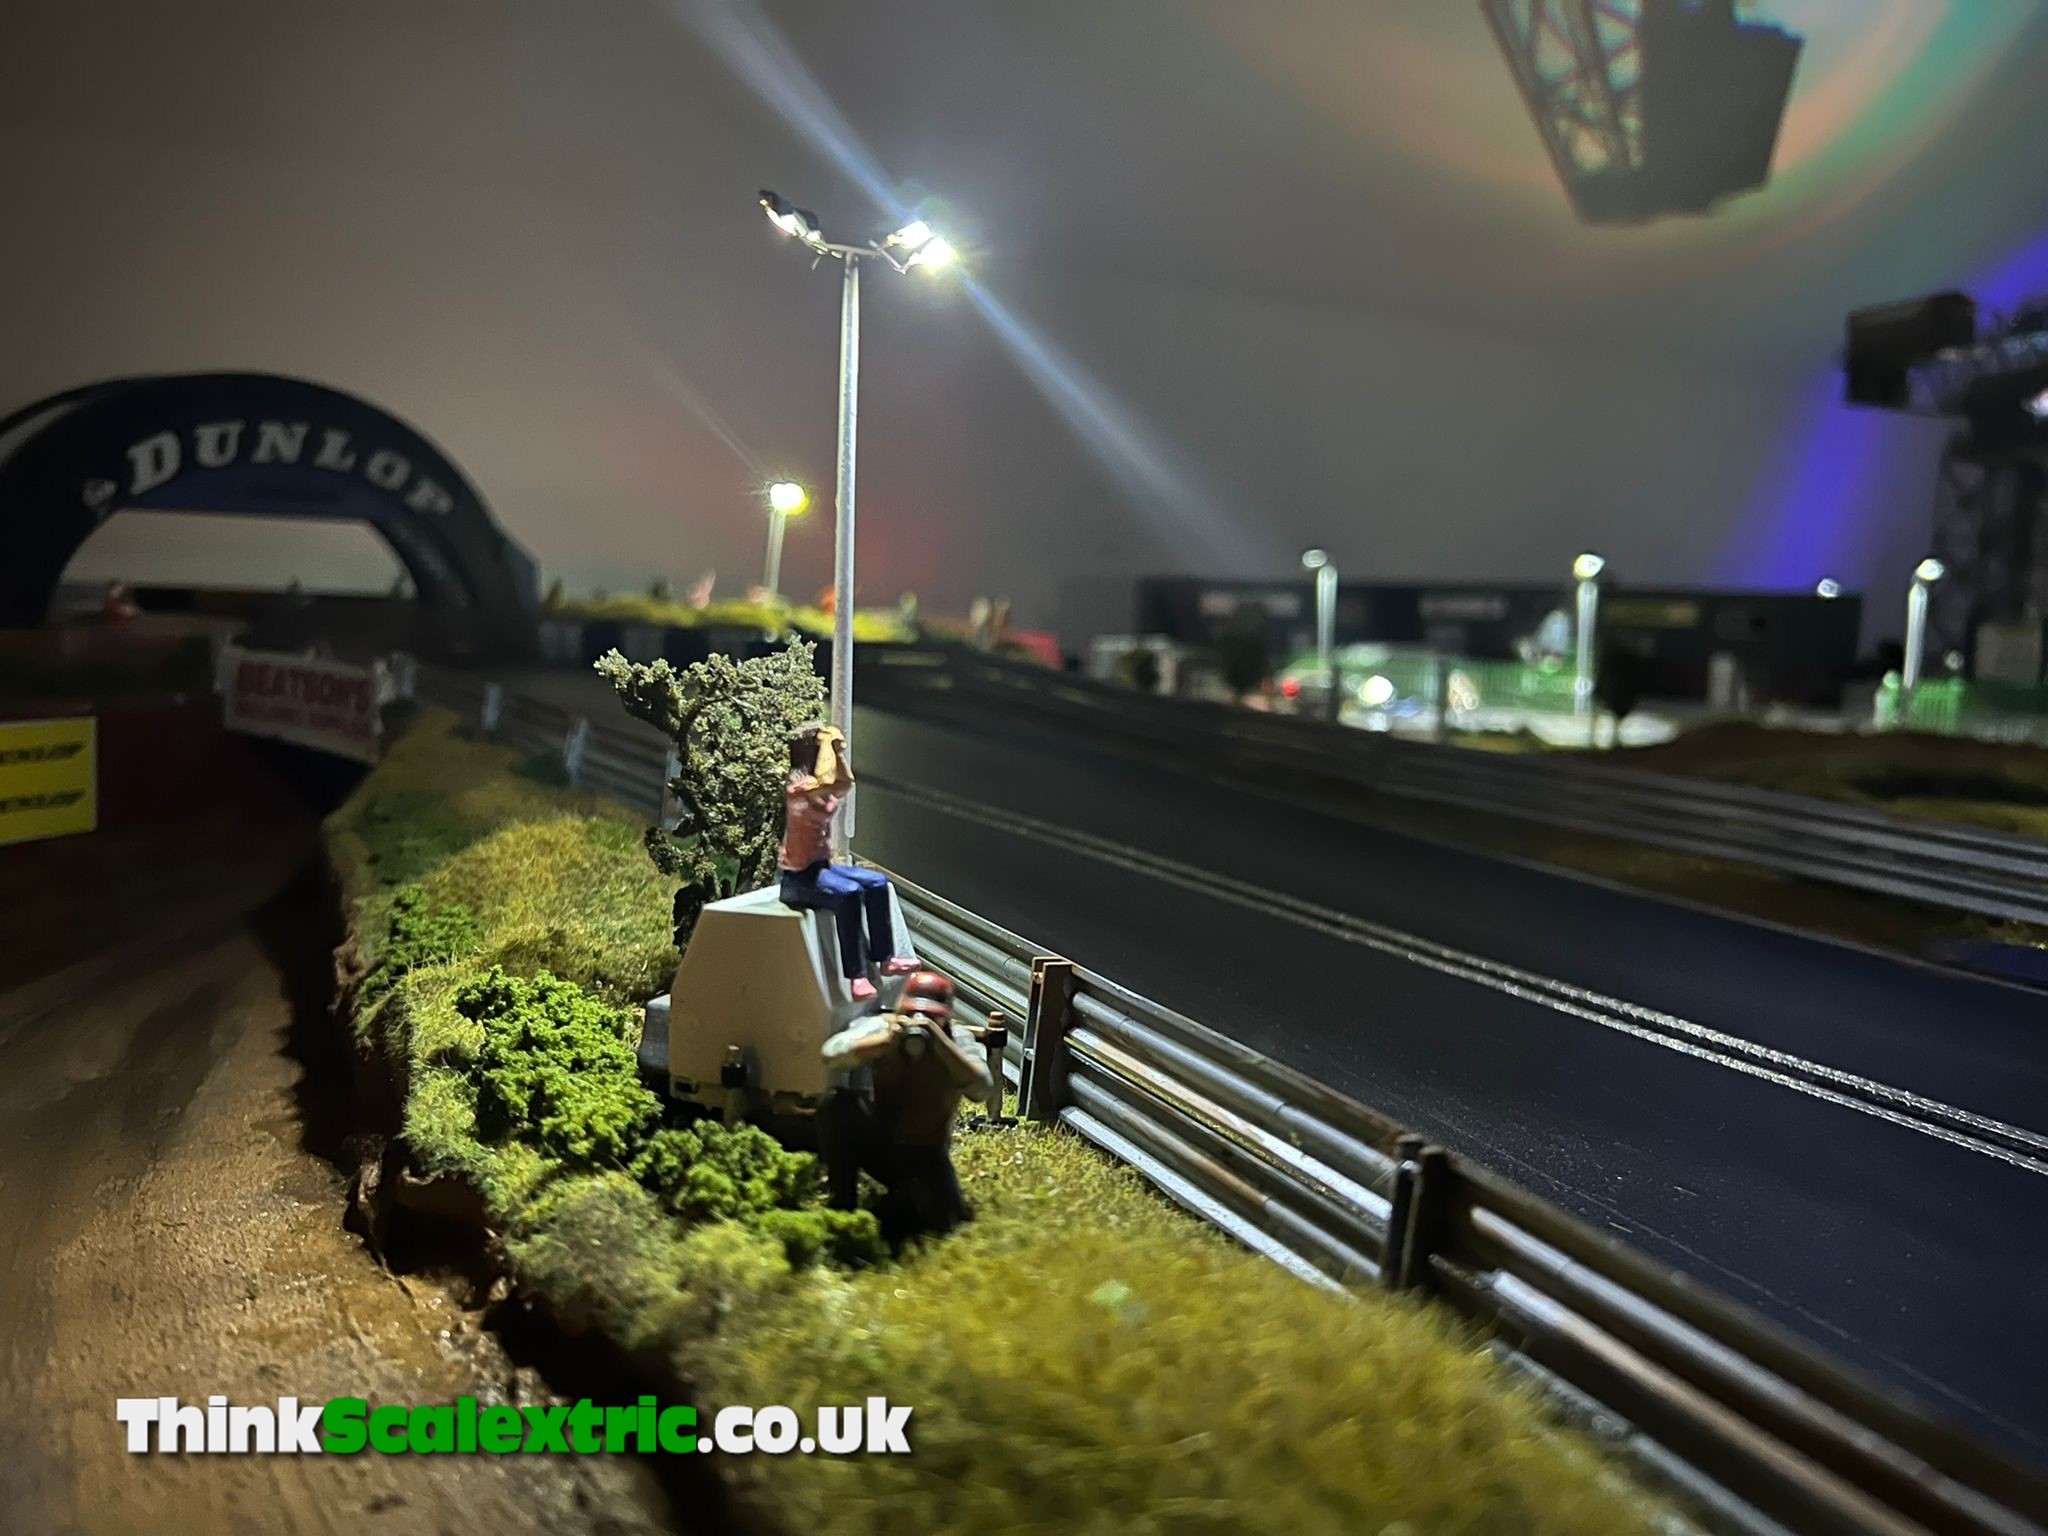 Bespoke Track: Scottish Dockyard 12' x 6.5'